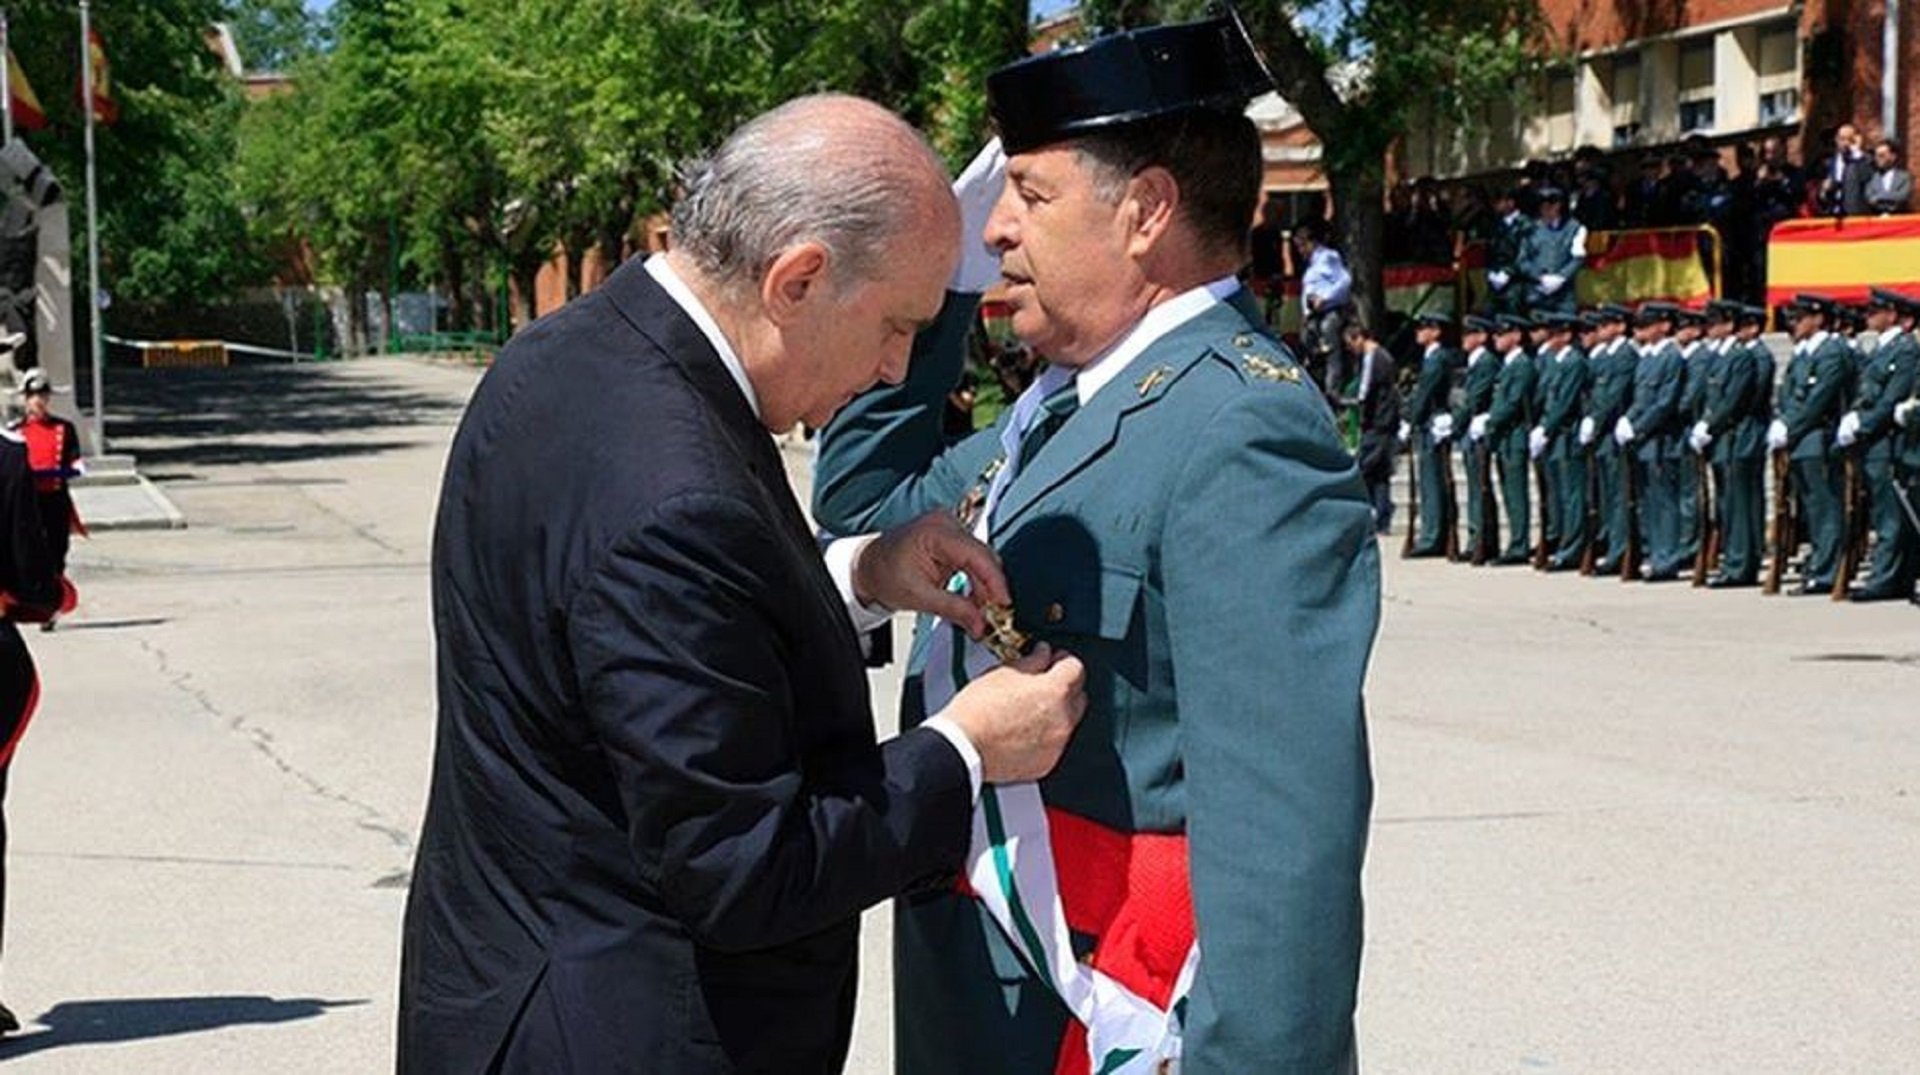 El general Pedro Vázquez Jarava i Jorge Fernández Díaz / Guardia Civil